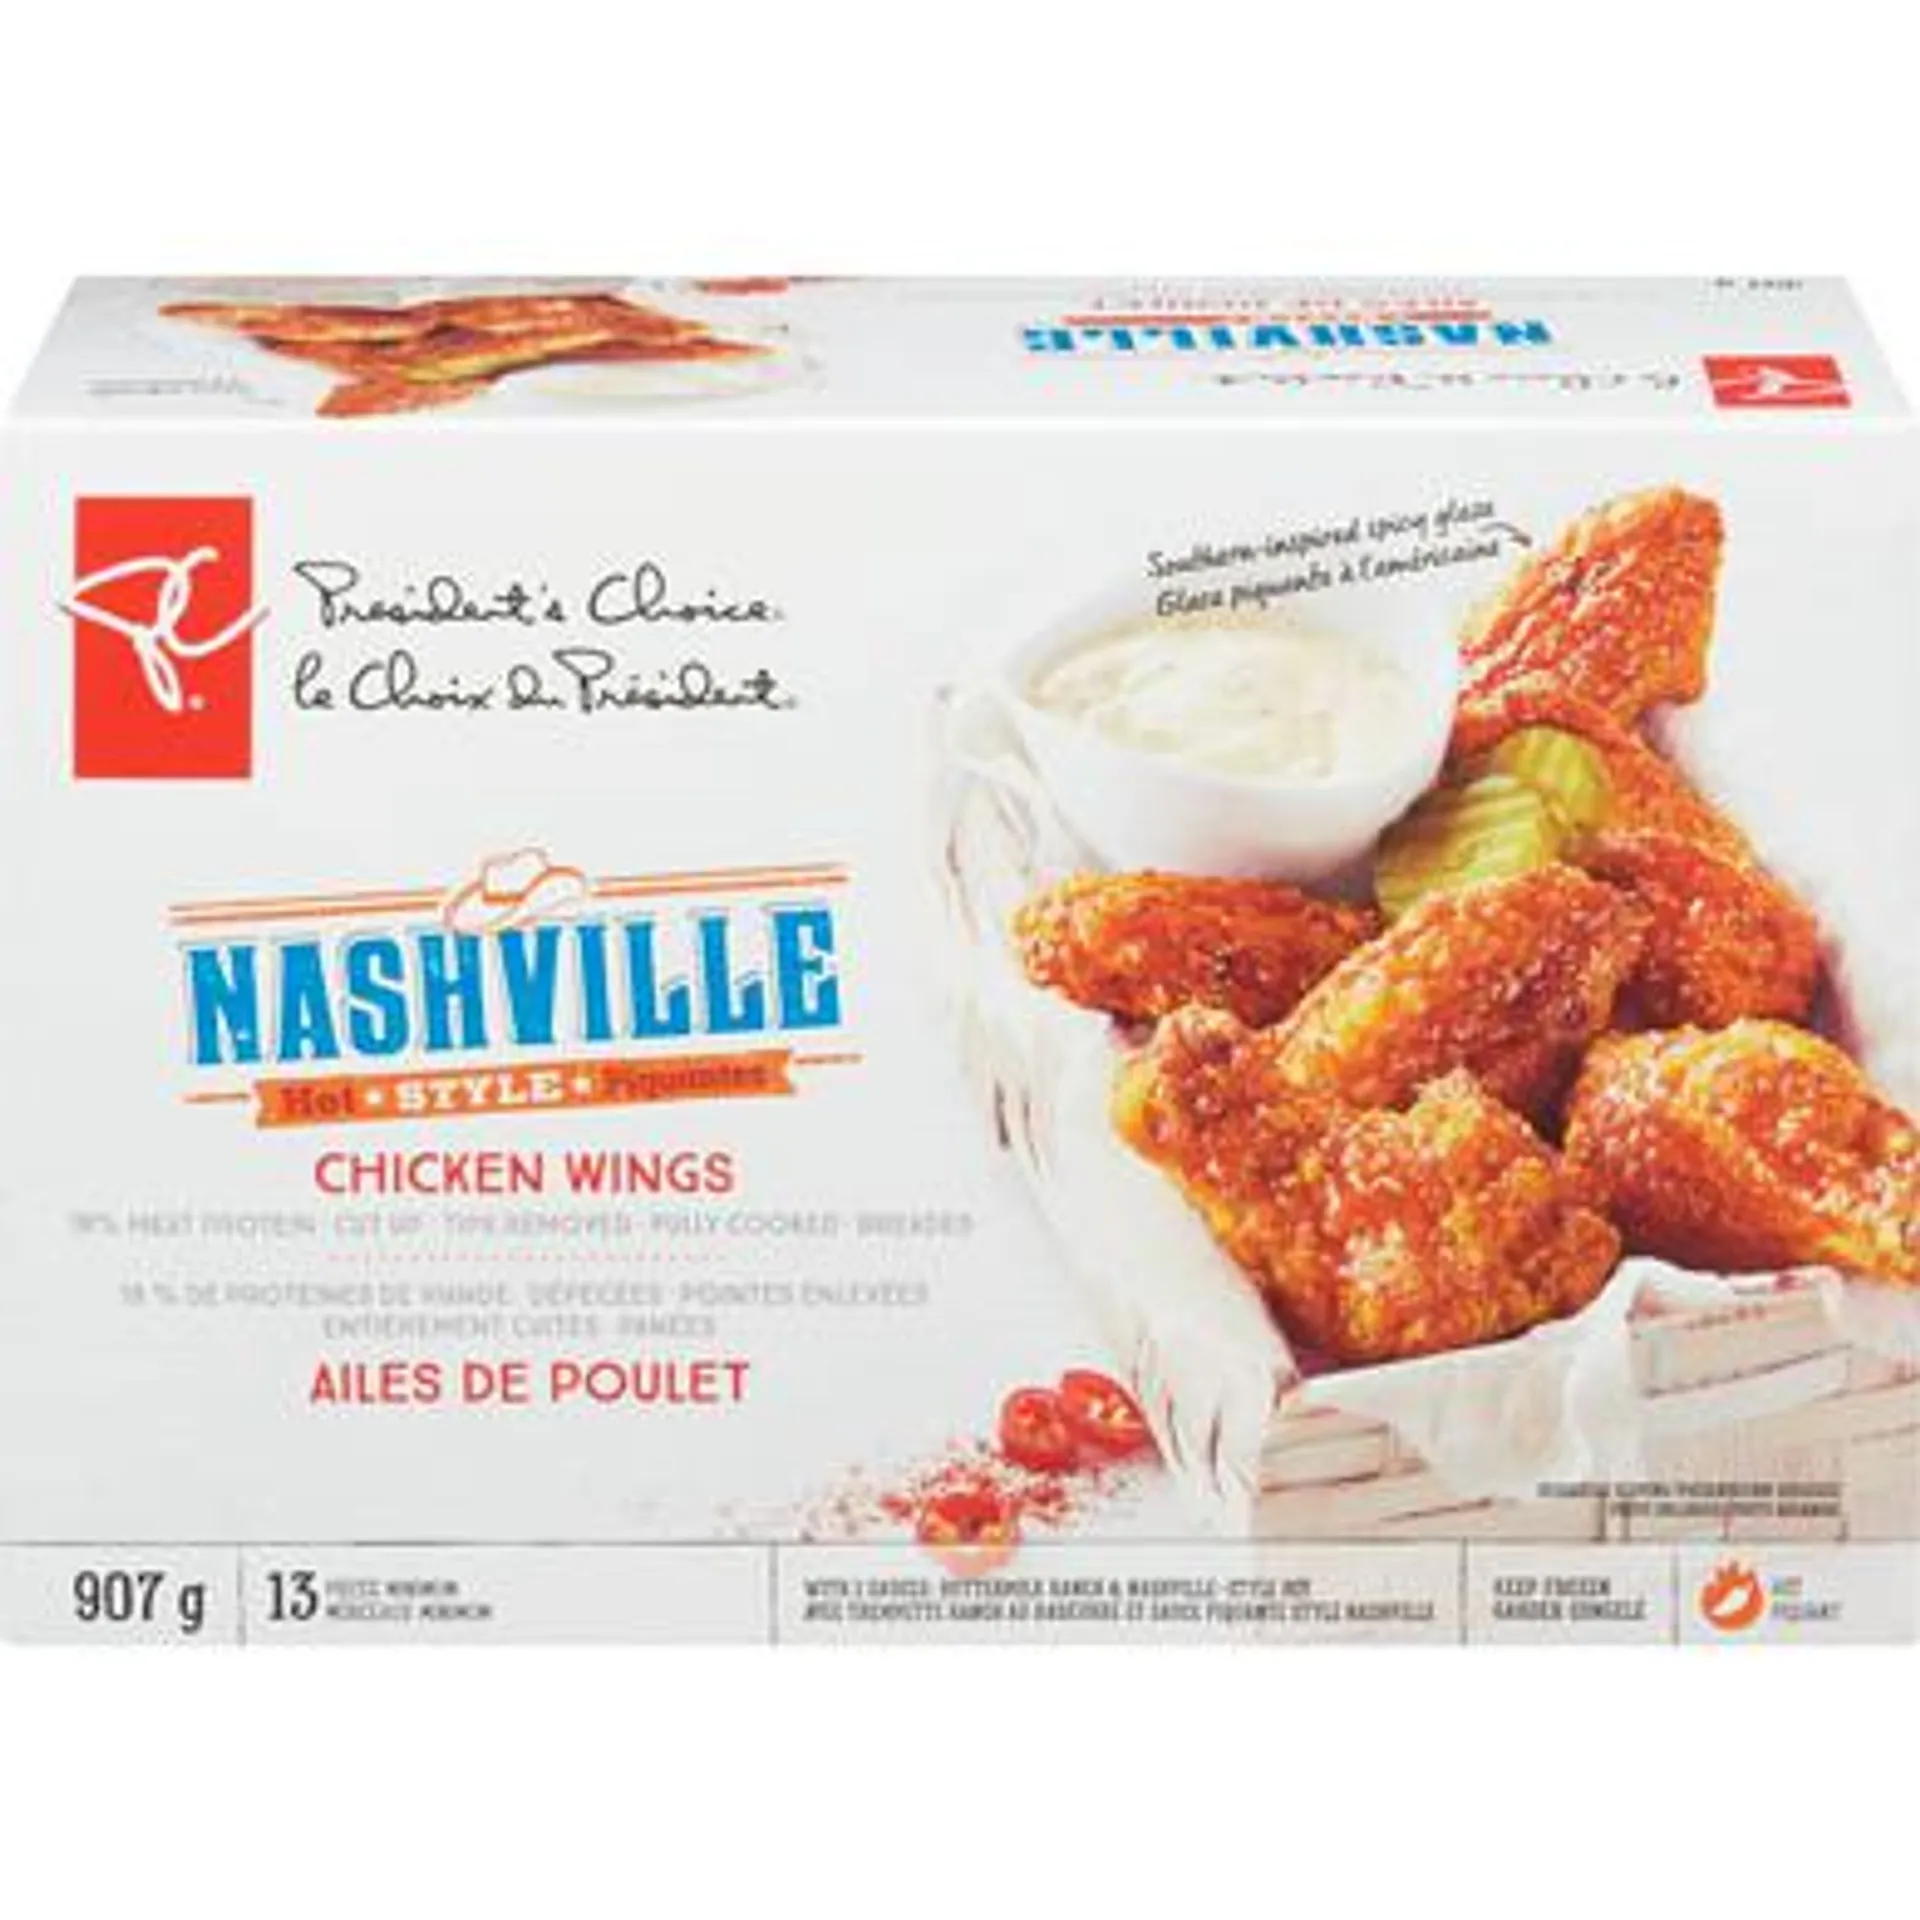 Nashville-Style Chicken Wings